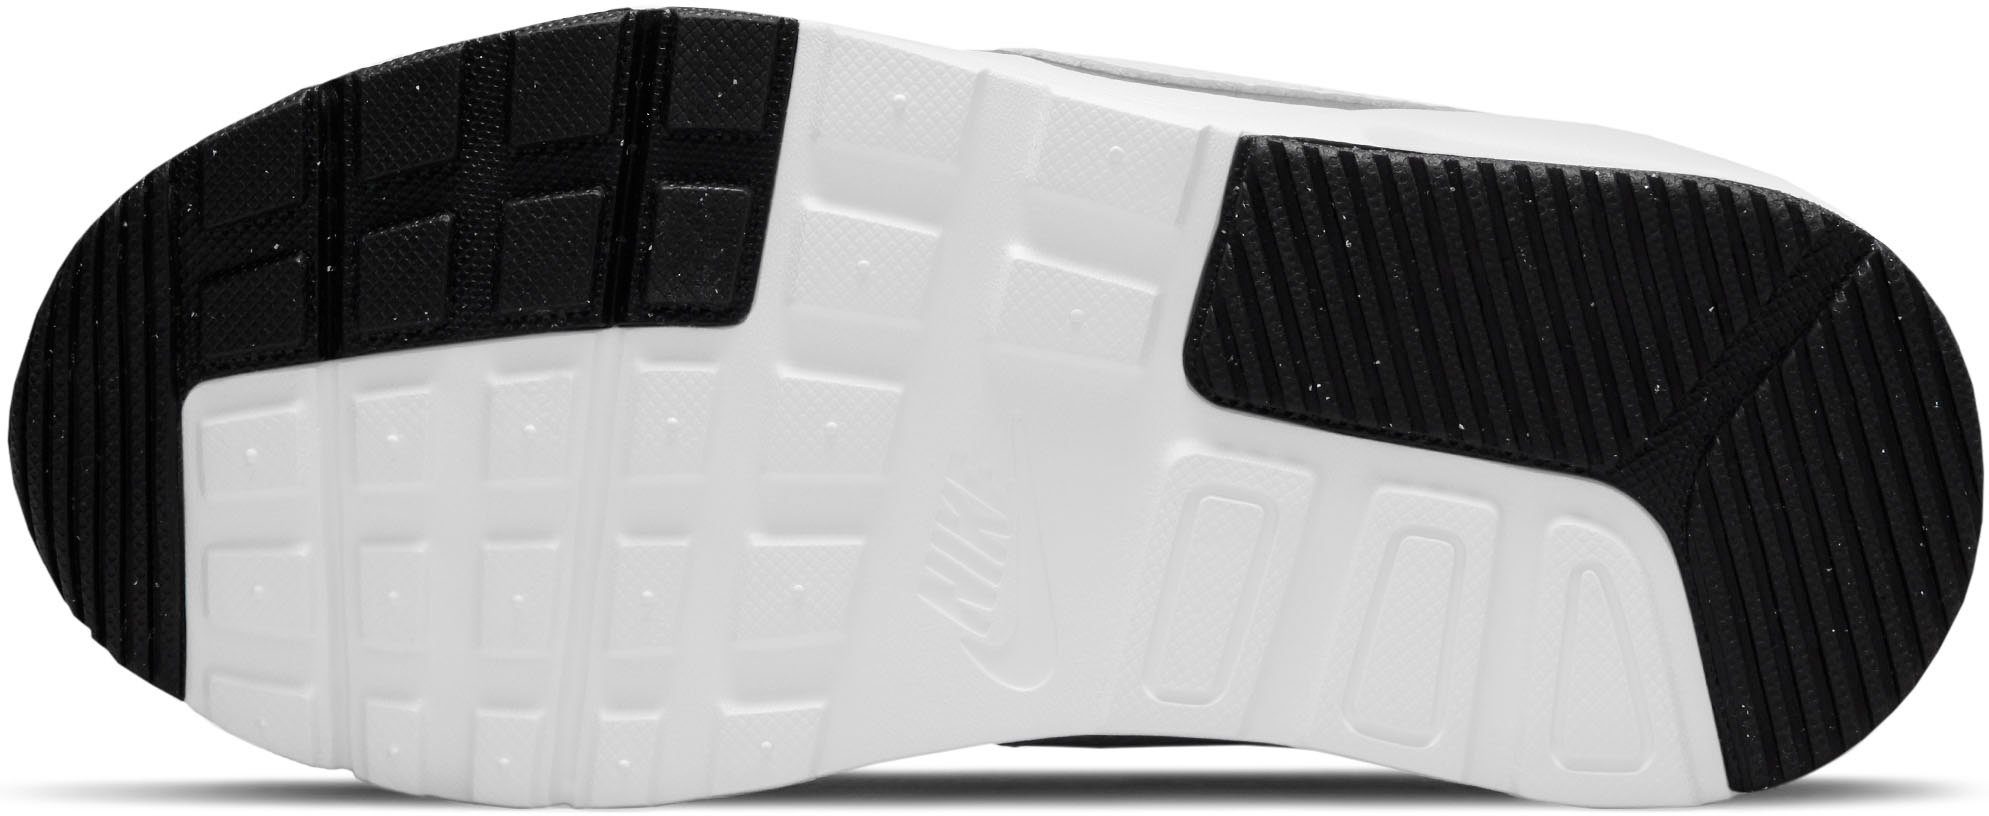 Sneaker AIR (PS) schwarz-weiß MAX Nike Sportswear SC